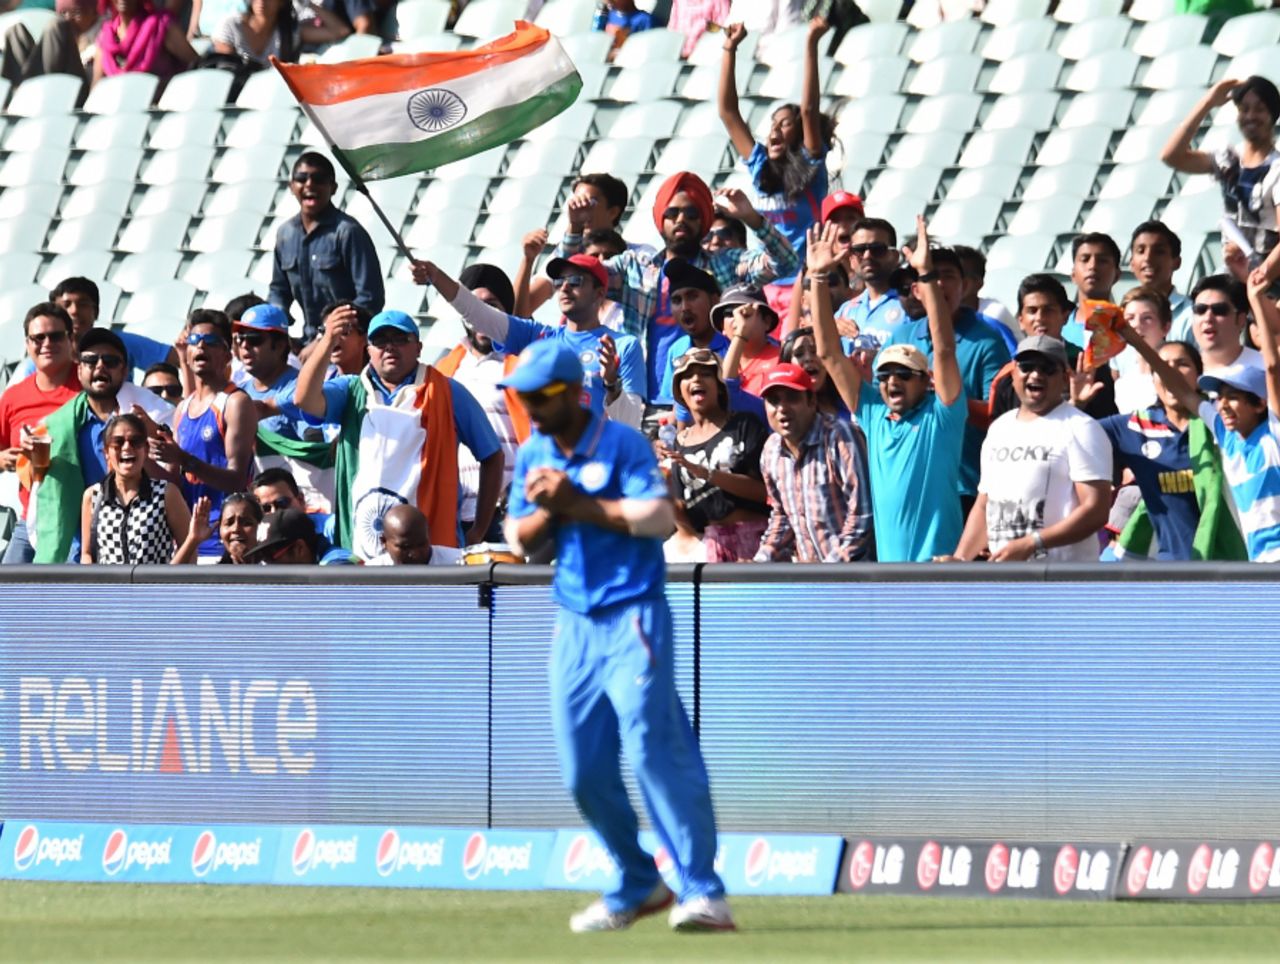 Fans cheer as Ajinkya Rahane takes a catch, Australia v India, World Cup warm-ups, Adelaide, February 8, 2015